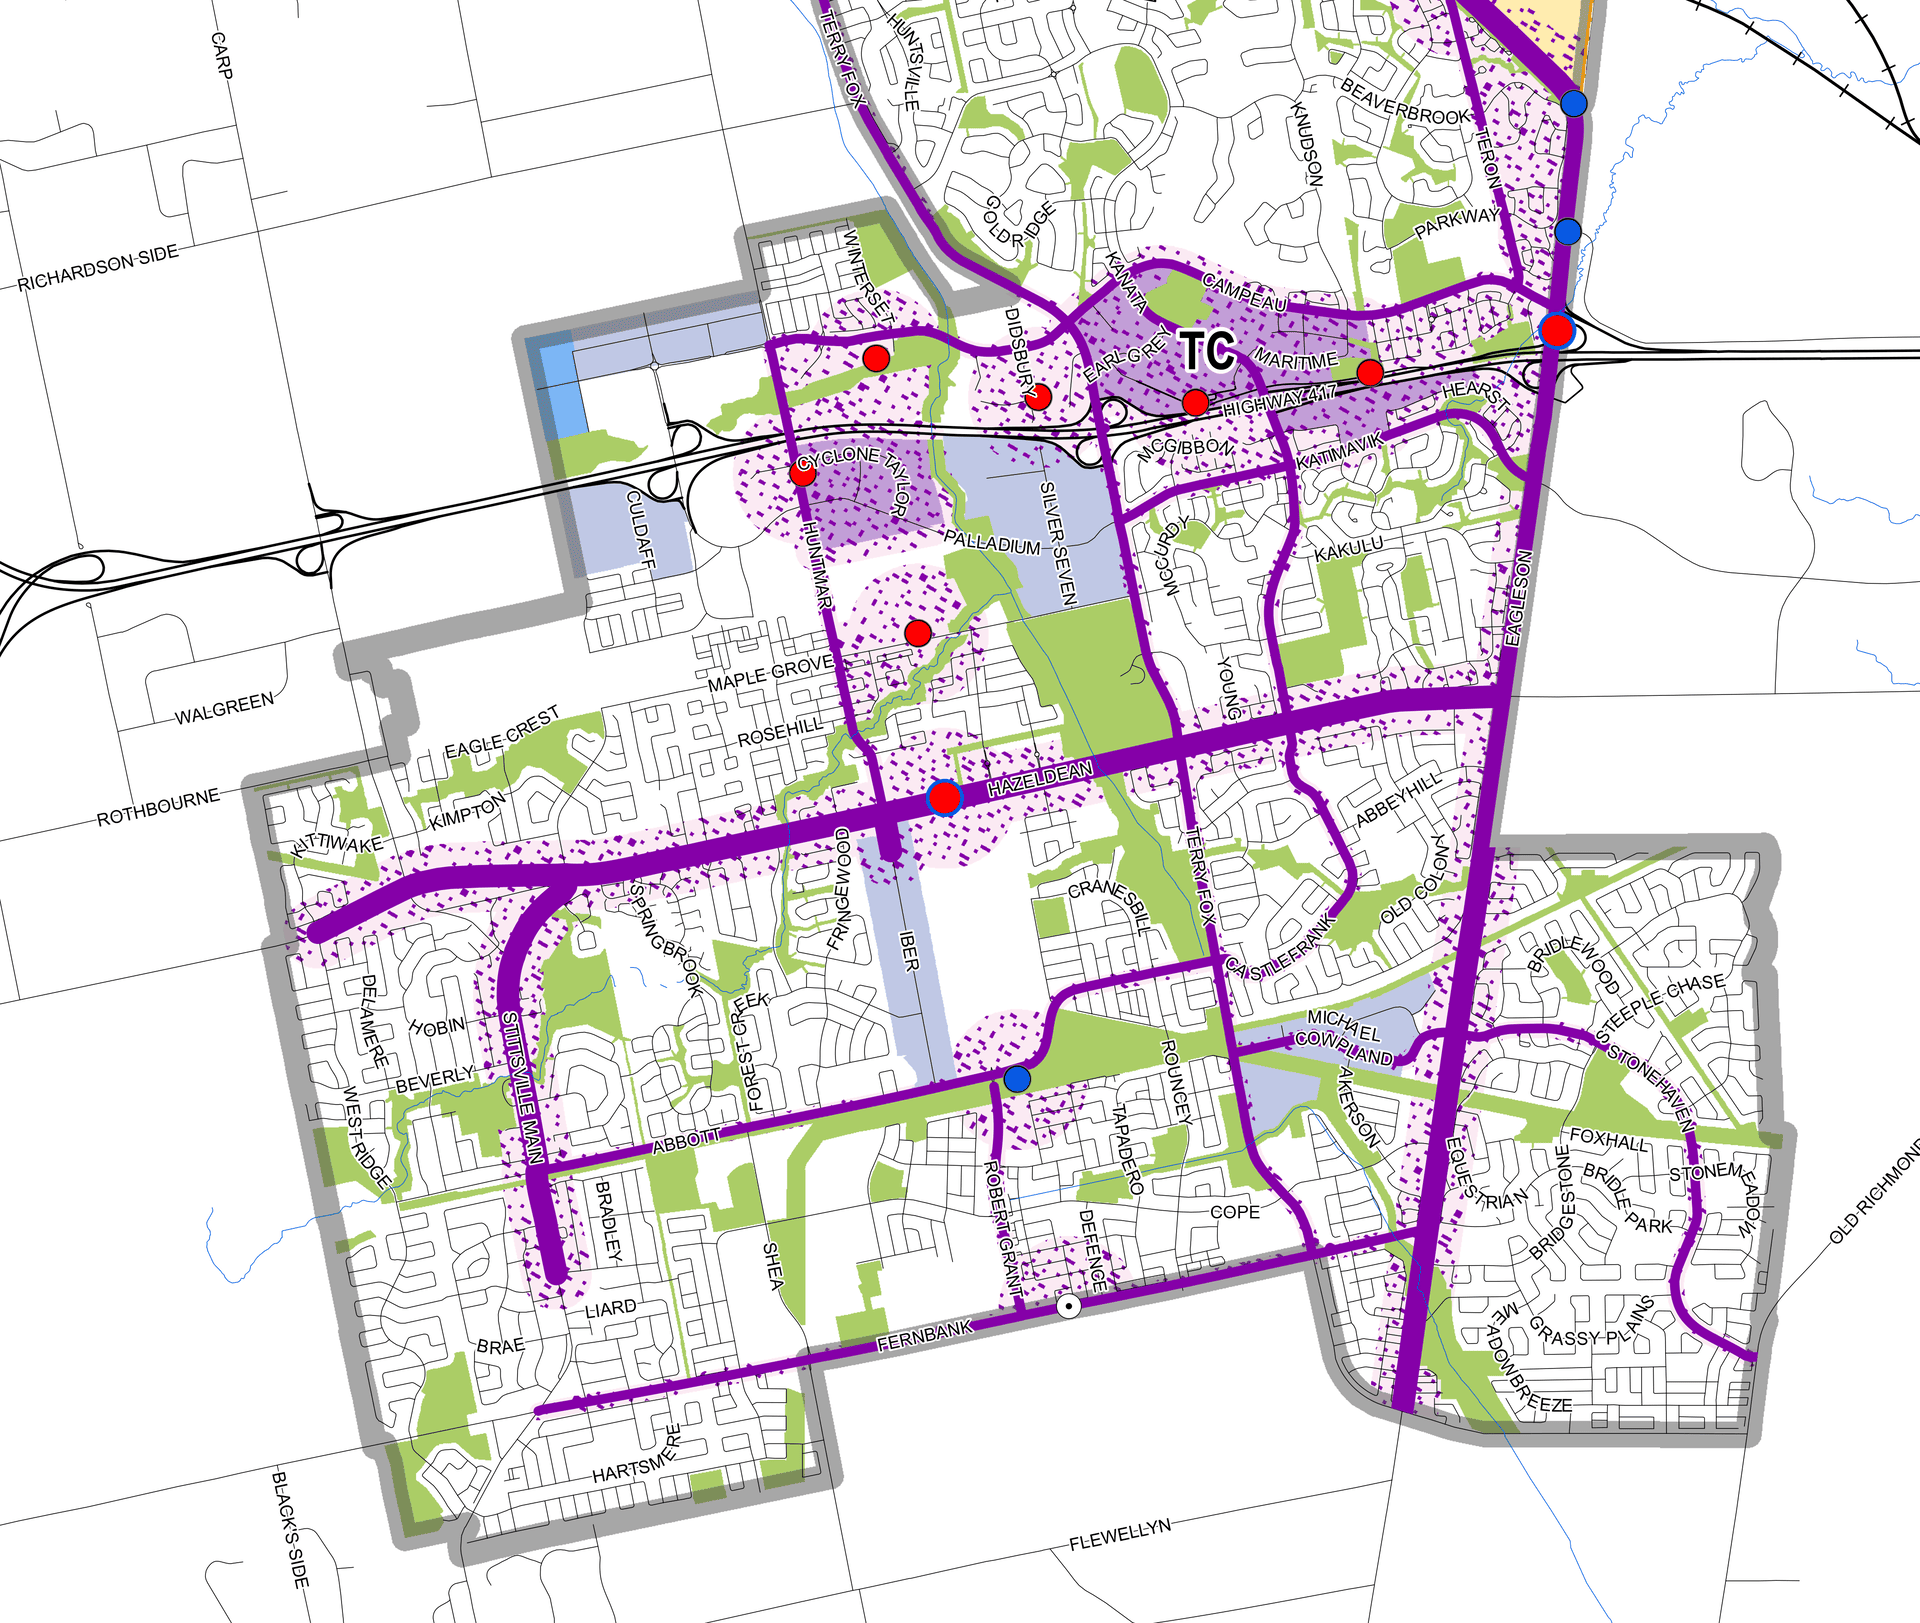 Ottawa Official Plan - Suburban transect evolving overlay, detail of Stittsville and Kanata